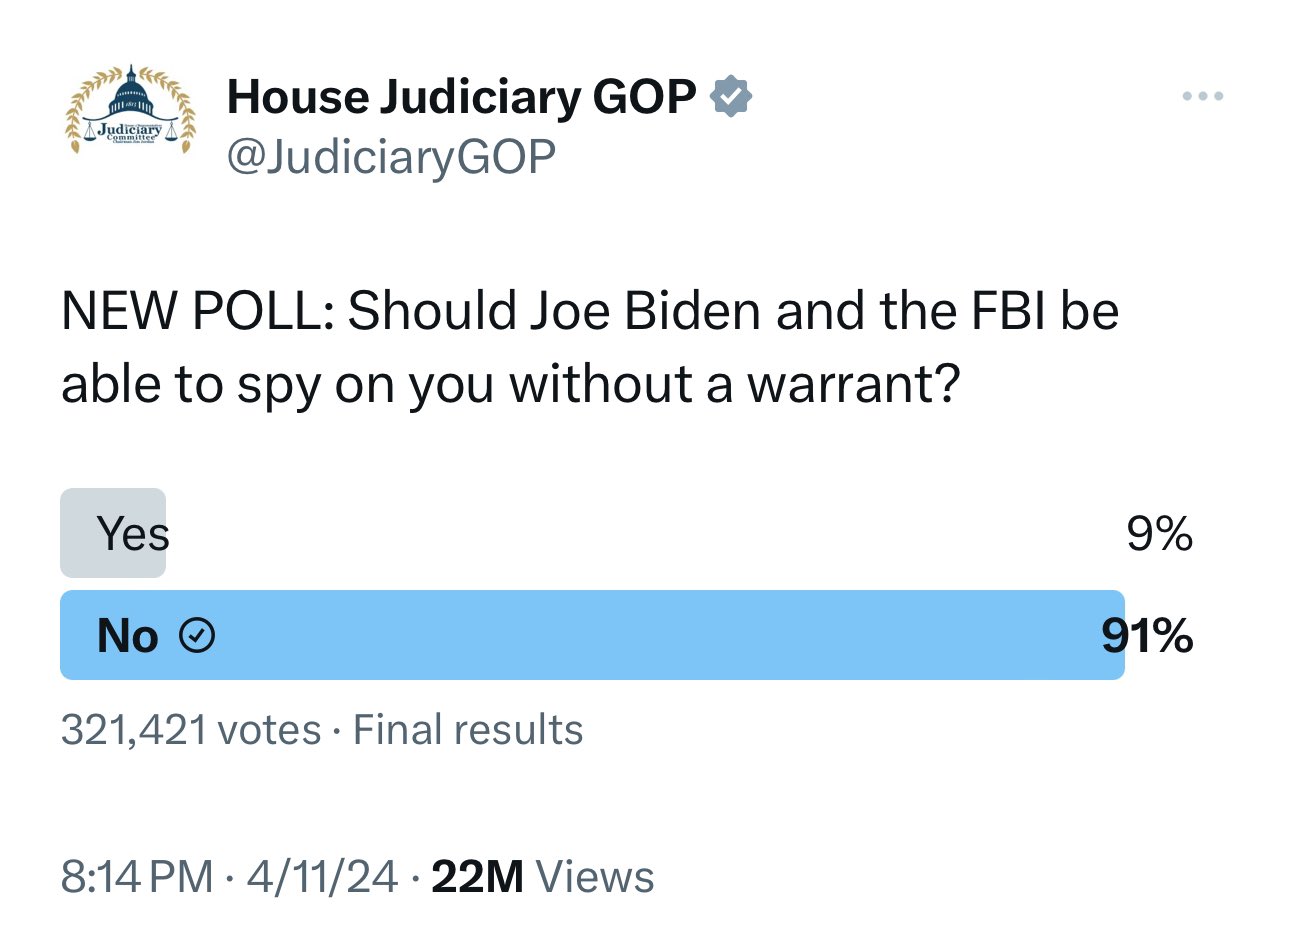 poll.jpg